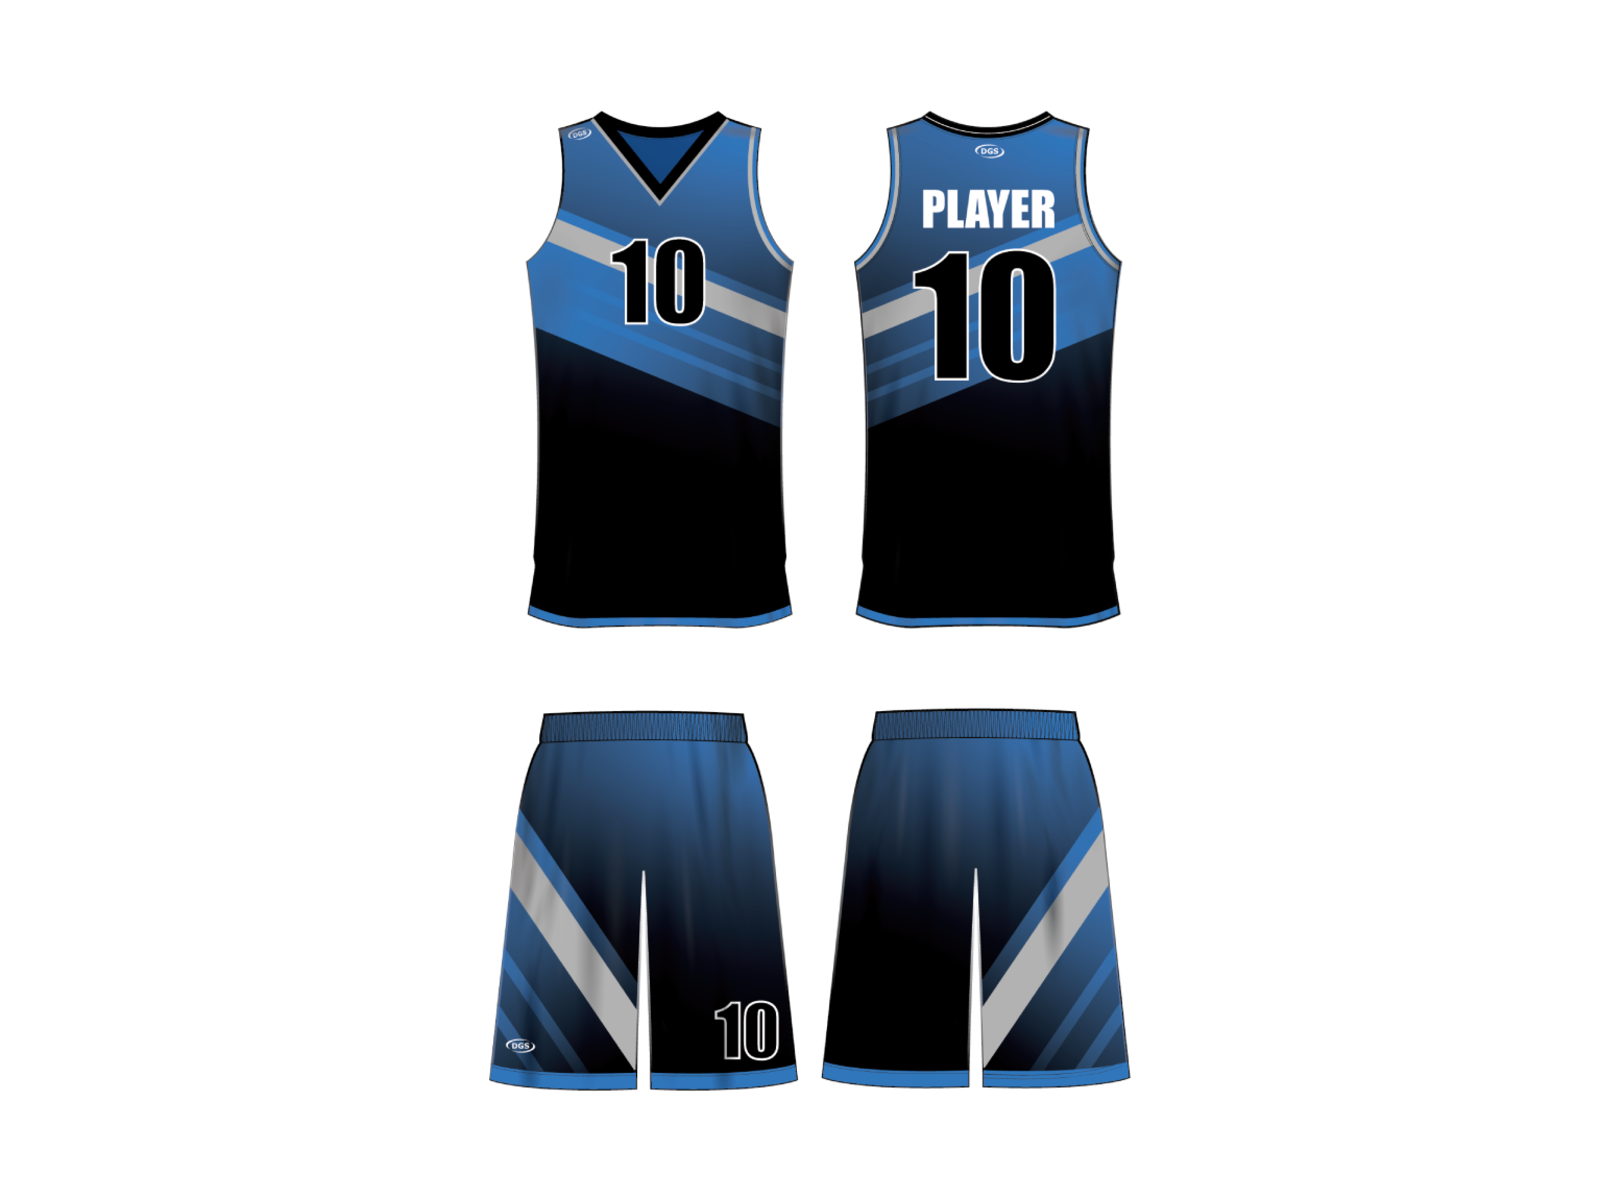 Basketball Uniform Design Ideas by Junjie Mao on Dribbble